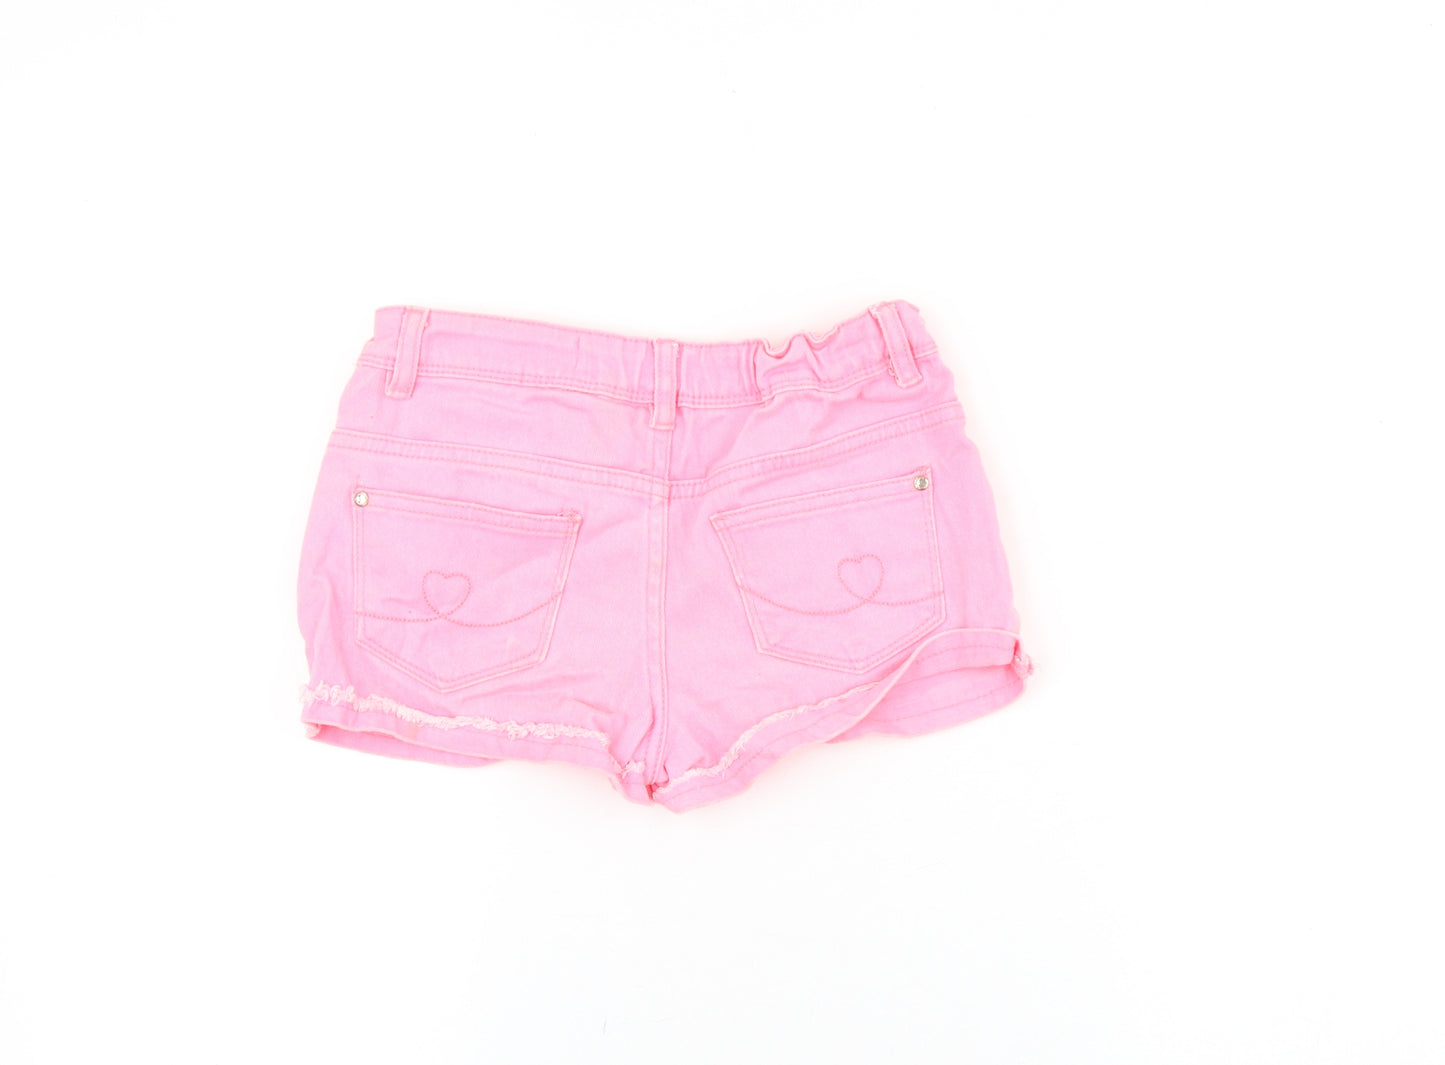 Denim & Co. Girls Pink Cotton Hot Pants Shorts Size 9-10 Years Regular Zip